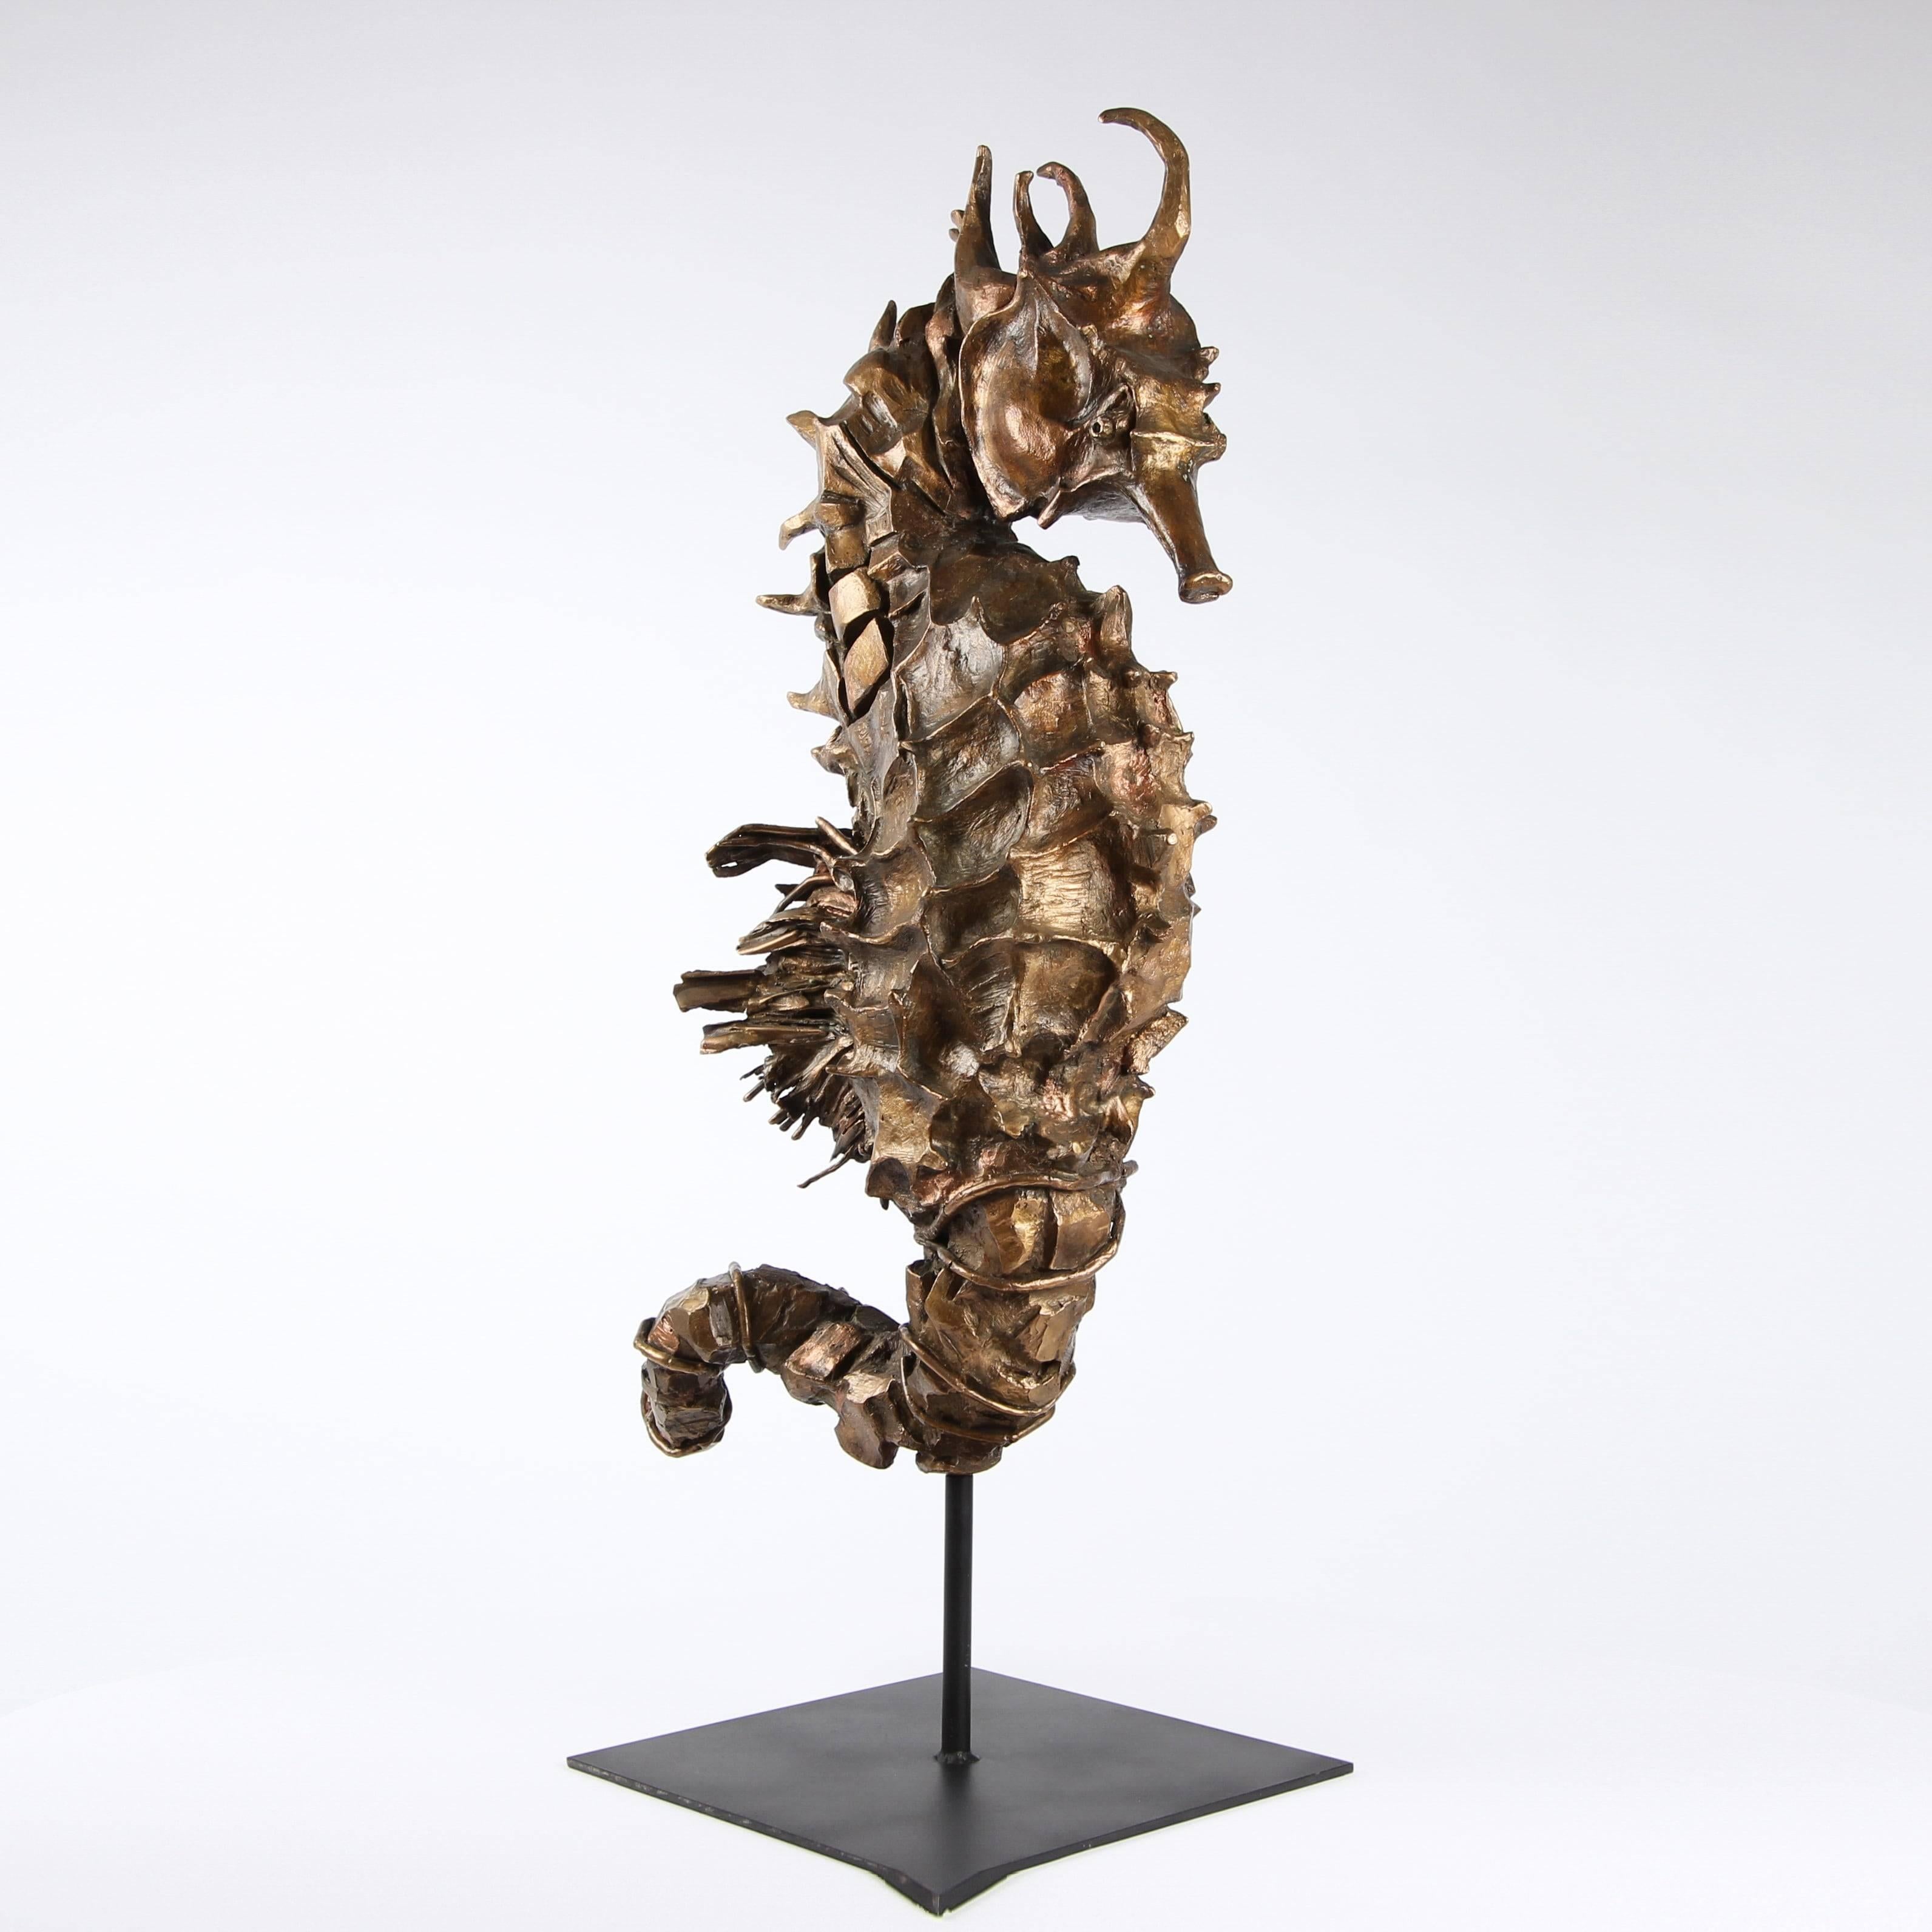 Seahorse Rex Gold by Chésade - Sealife bronze sculpture, sea animal For Sale 2